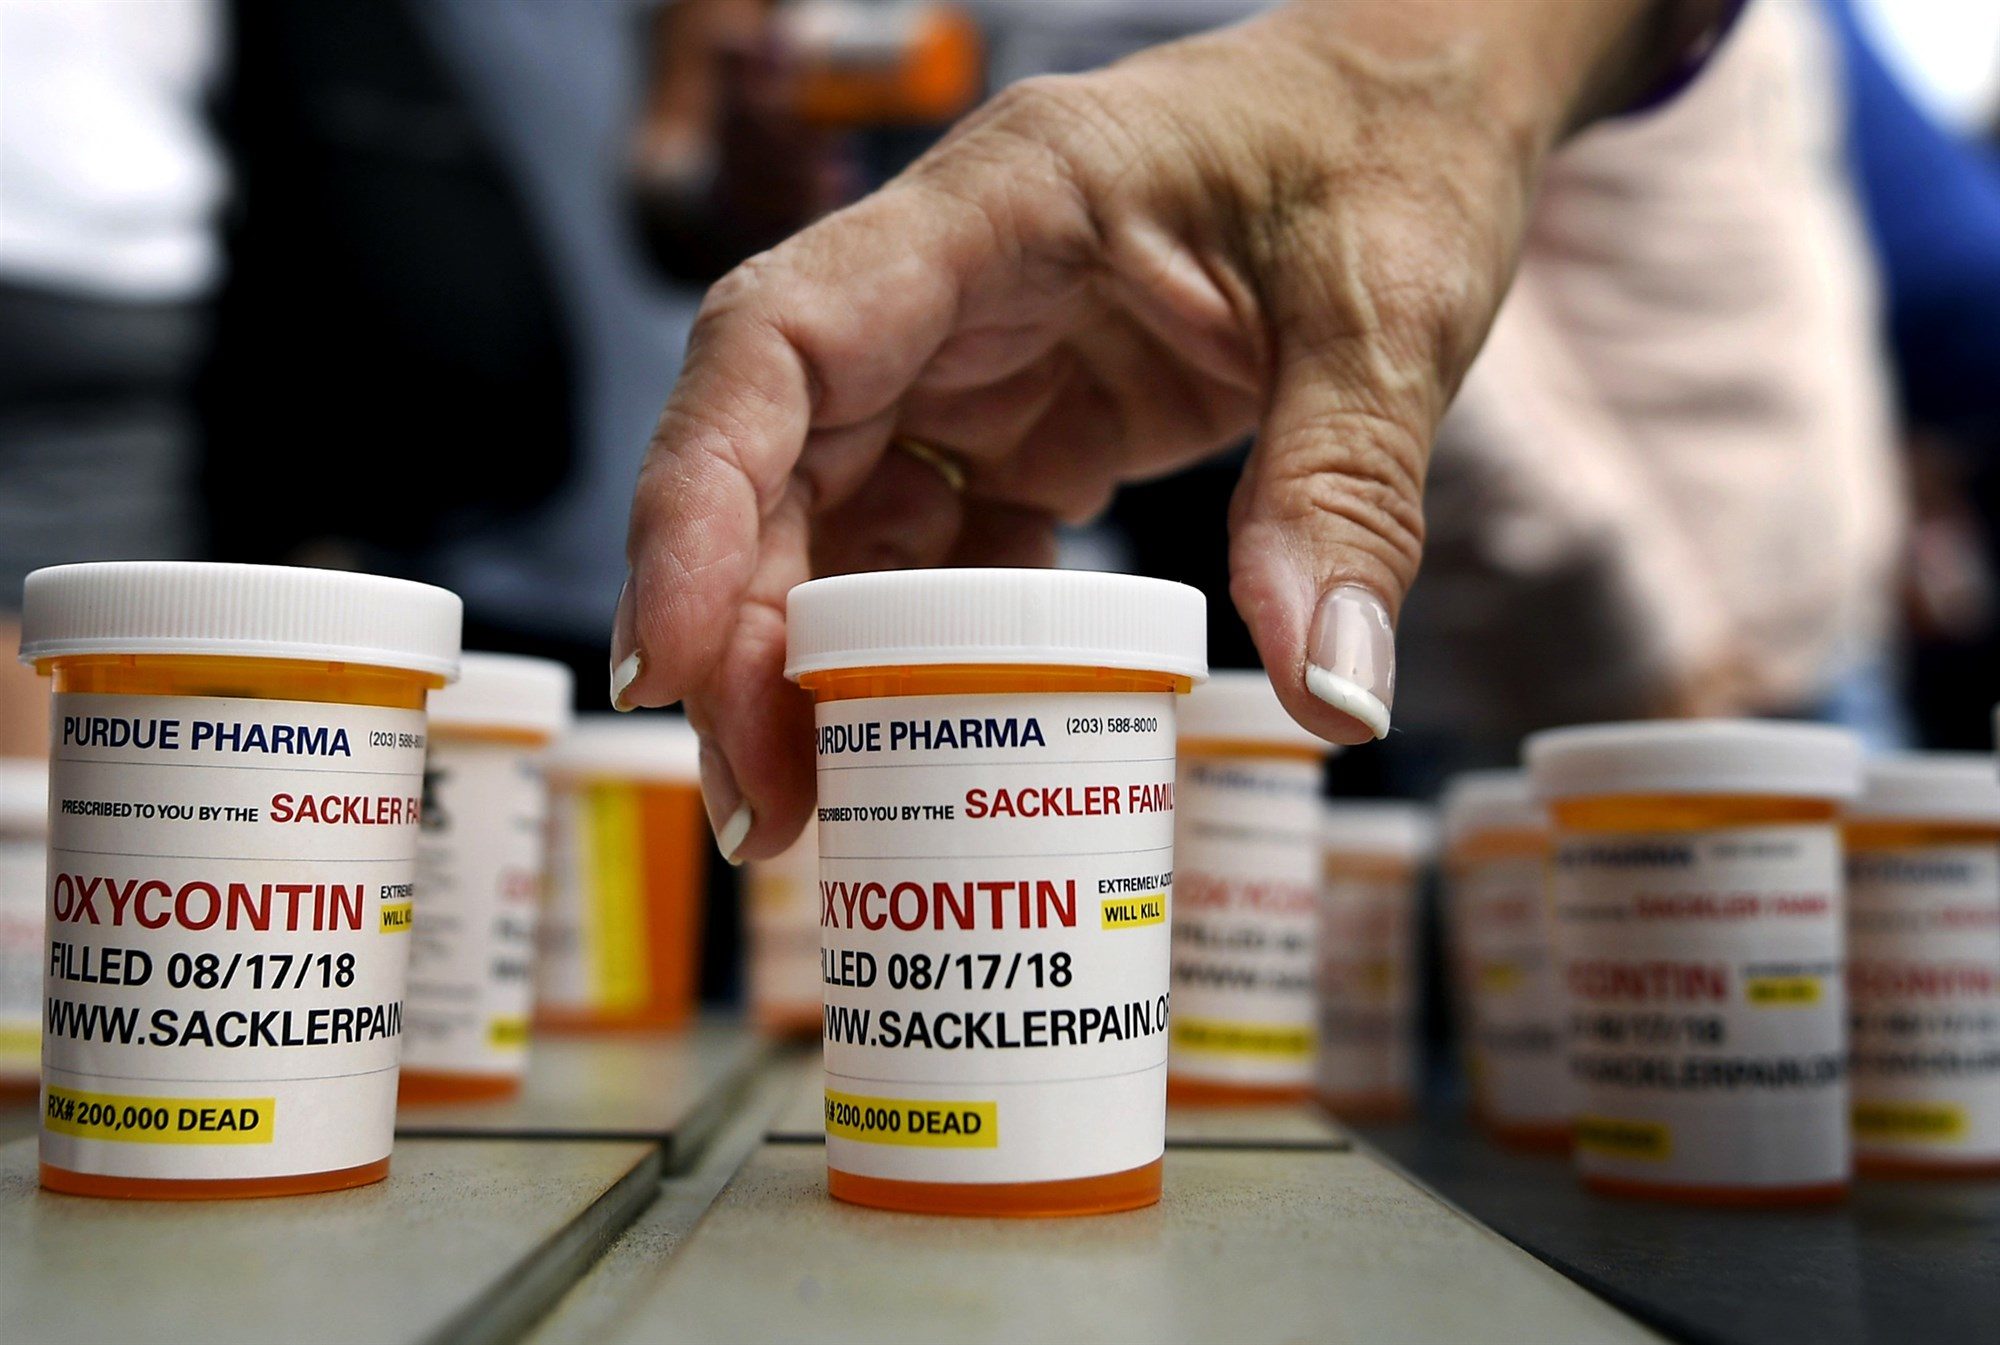 oxycontin purdue pharma lawsuite, opiod crisis